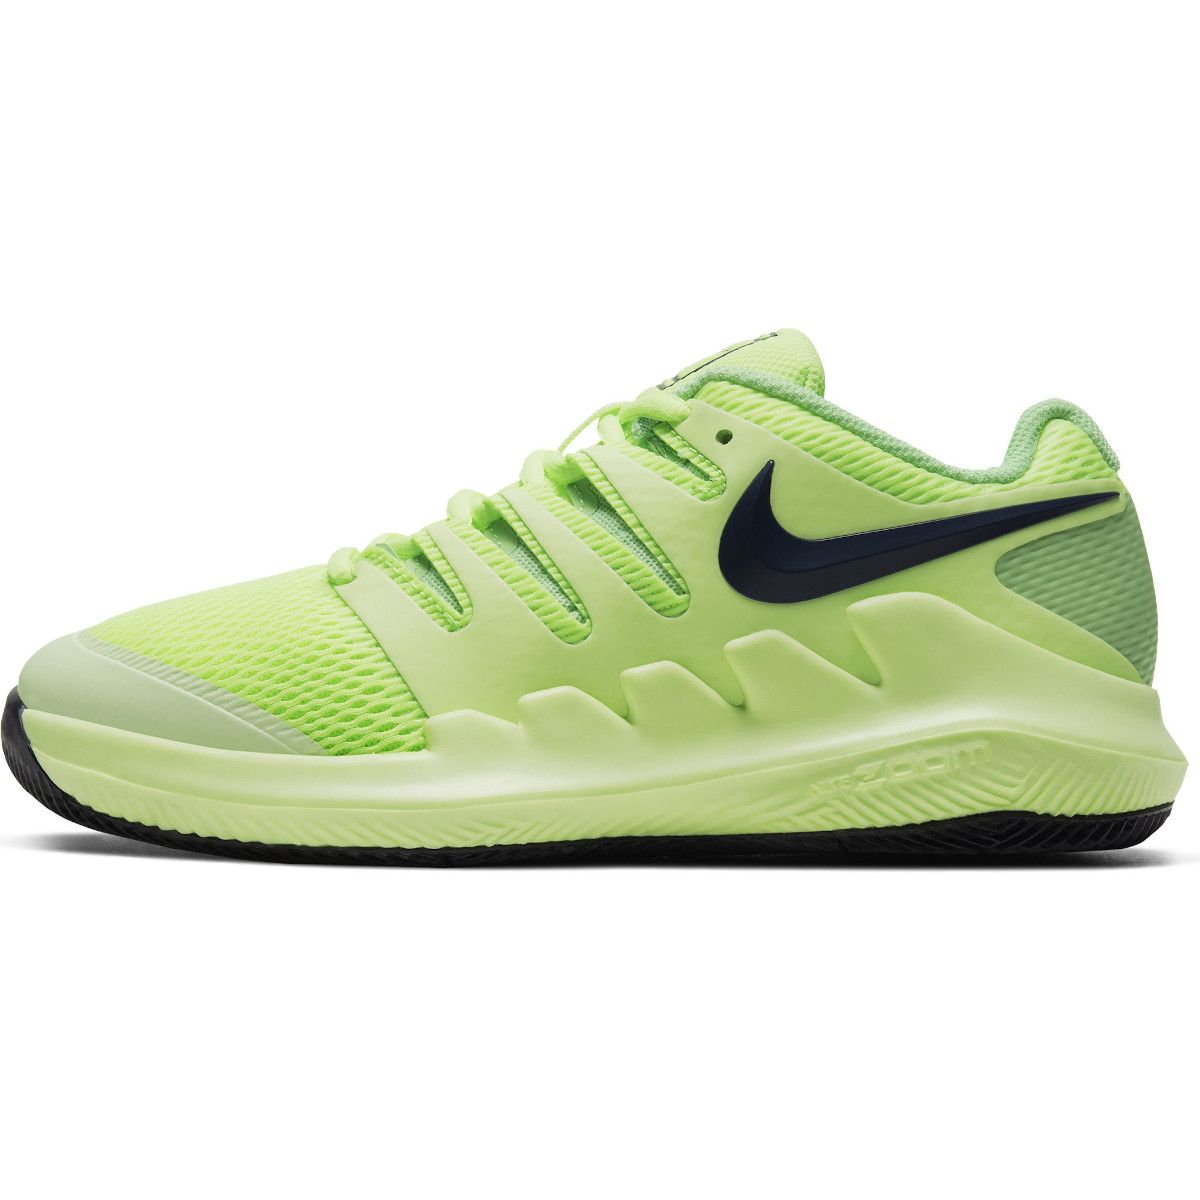 NikeCourt Vapor X Junior Tennis Shoes AR8851-302